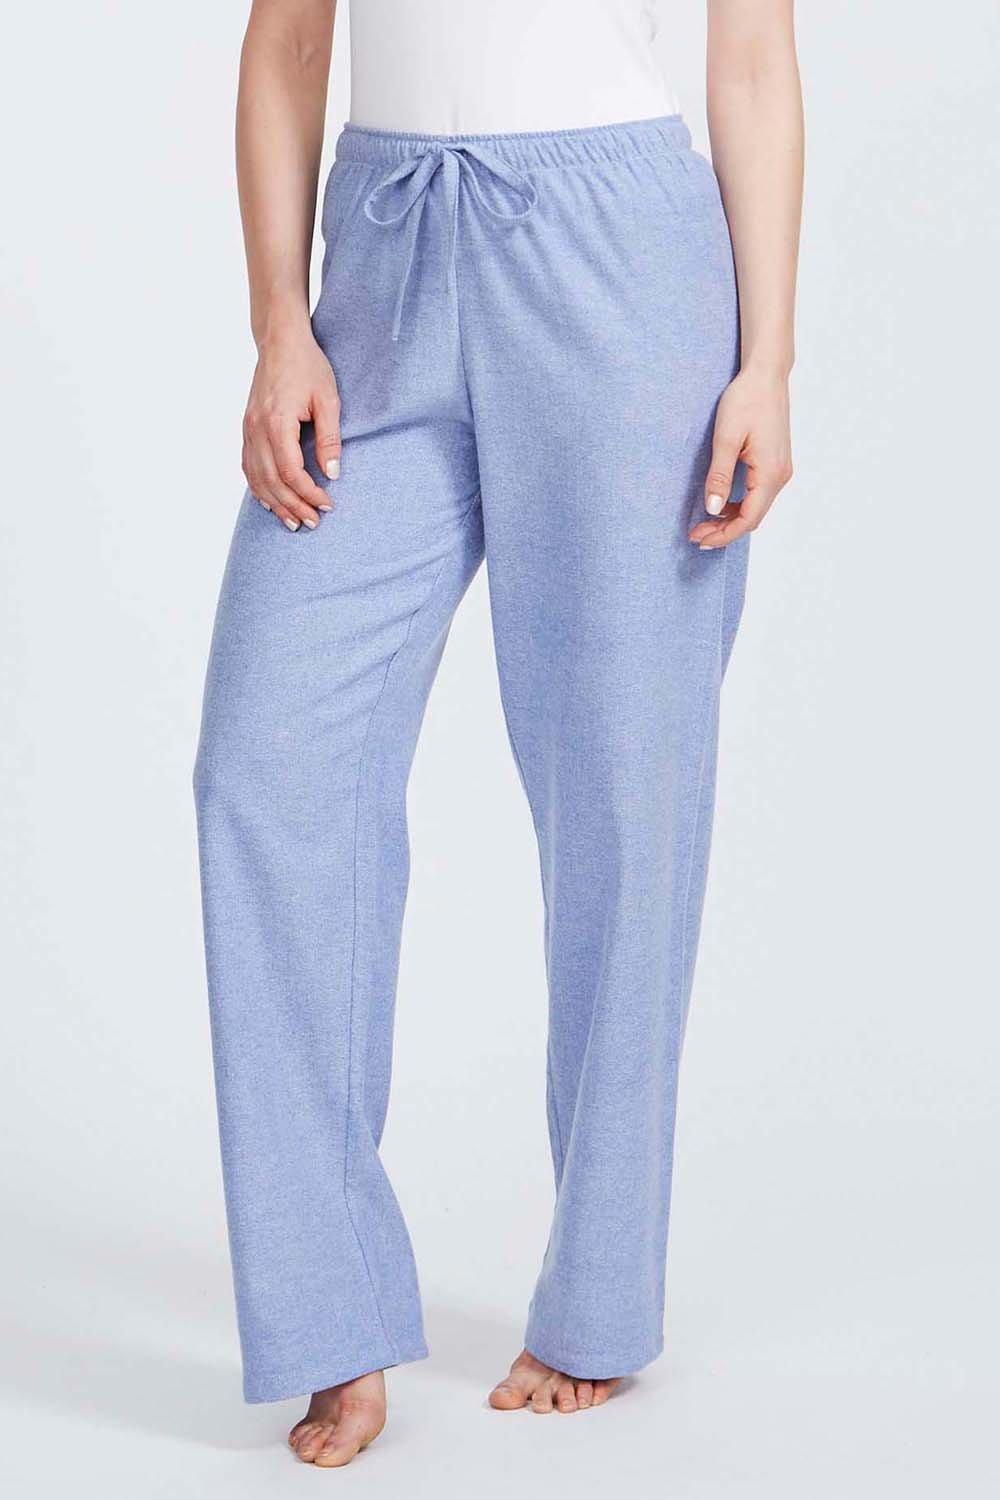 'Staffordshire Blue' Herringbone Brushed Cotton Pyjama Trousers